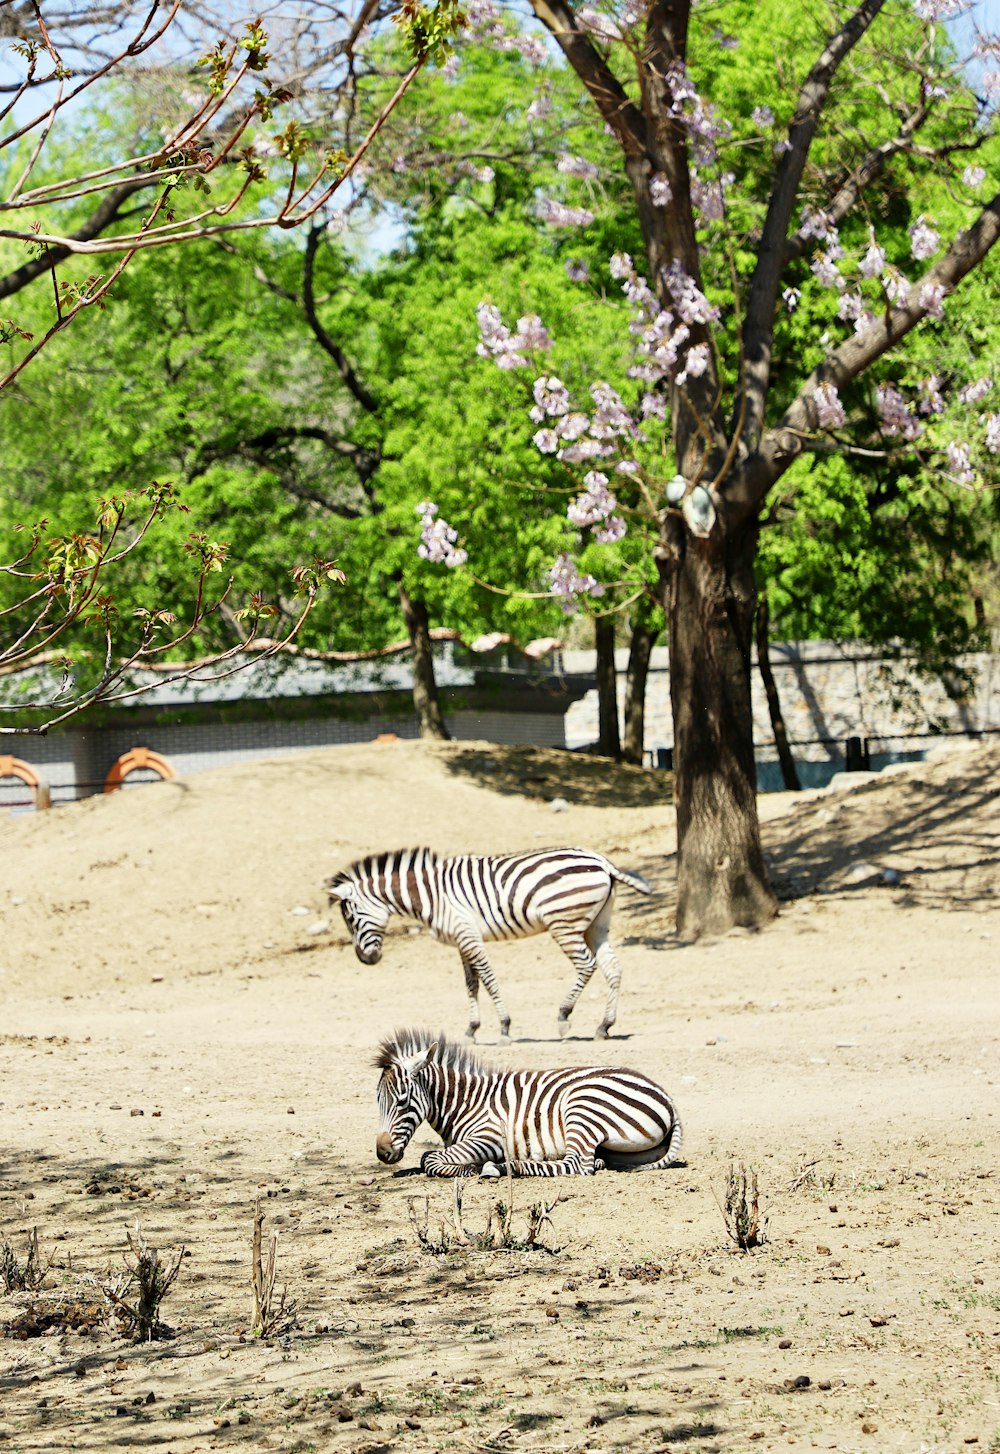 zebra standing on brown sand near green trees during daytime